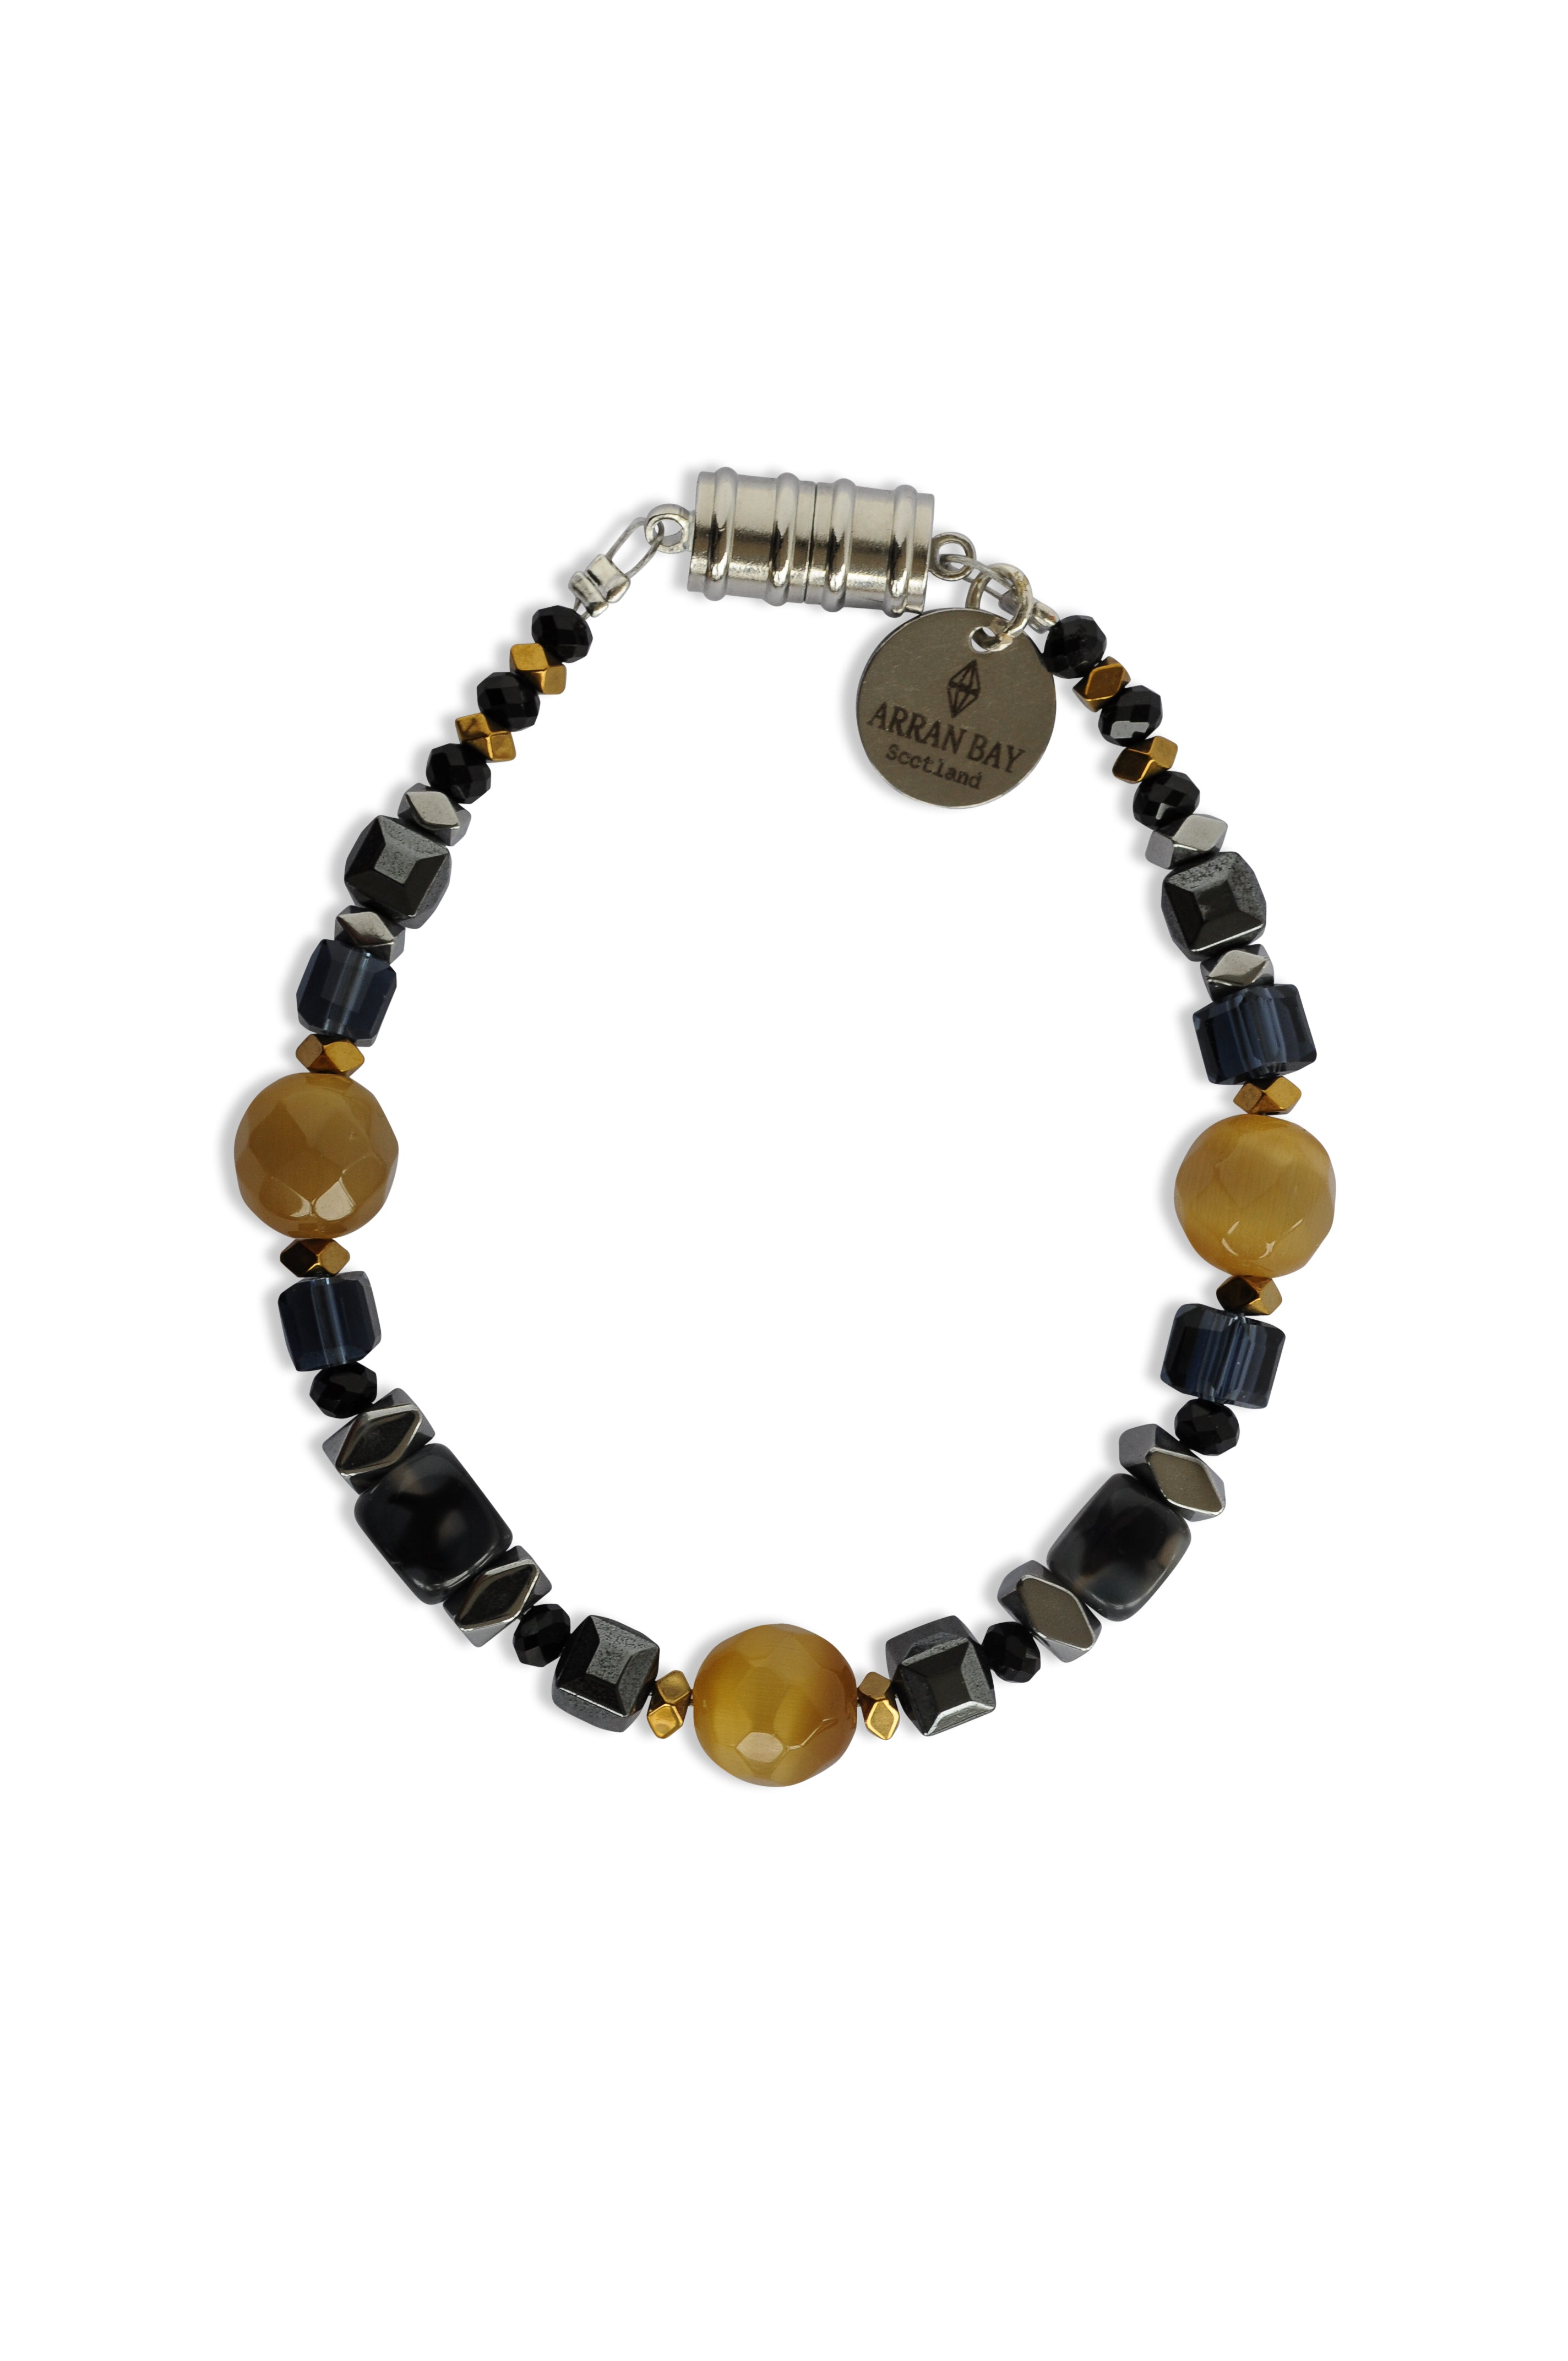 Black Glass Bracelet - The Nancy Smillie Shop - Art, Jewellery & Designer Gifts Glasgow